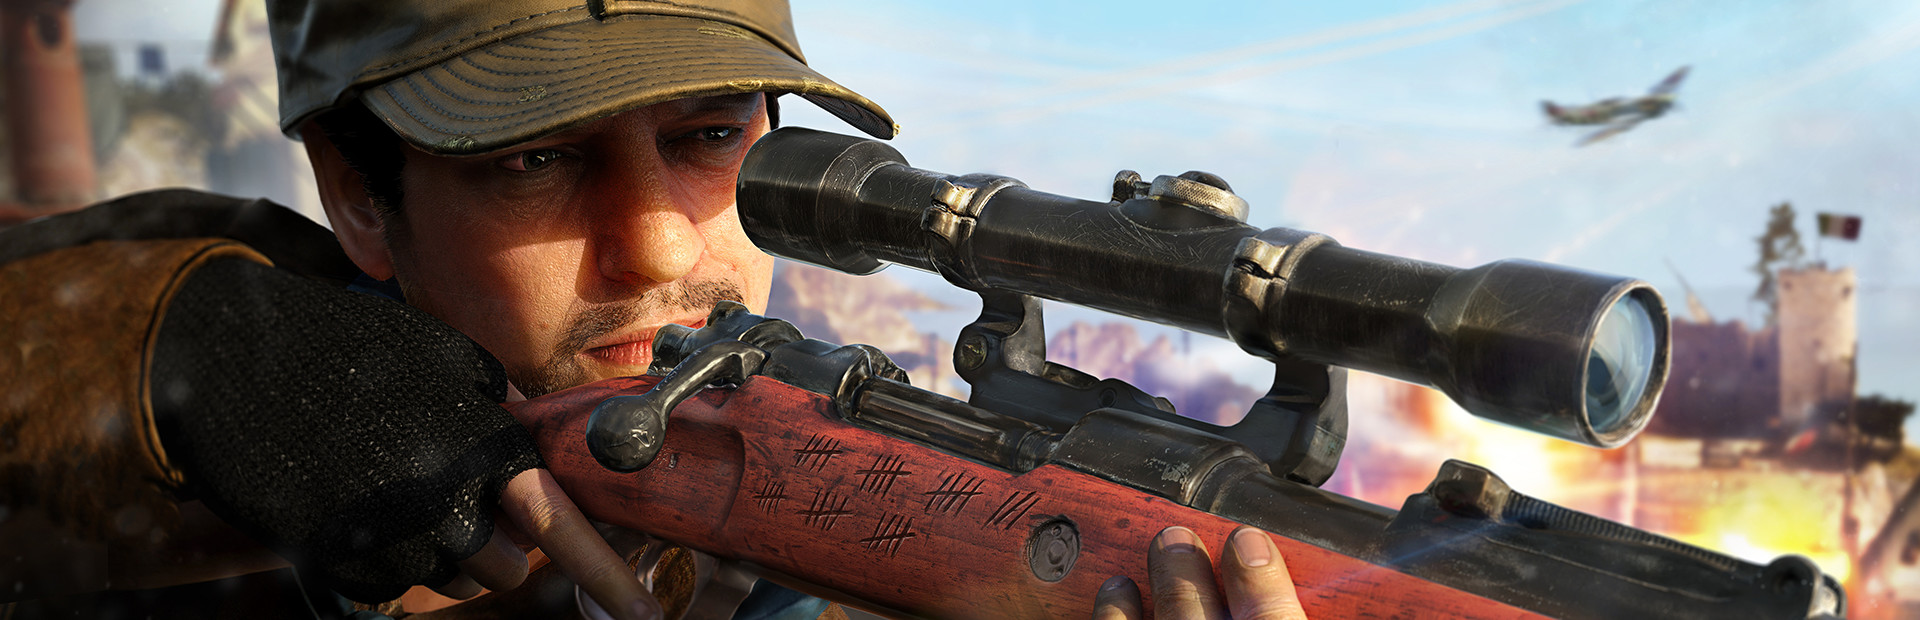 Sniper Elite VR cover image